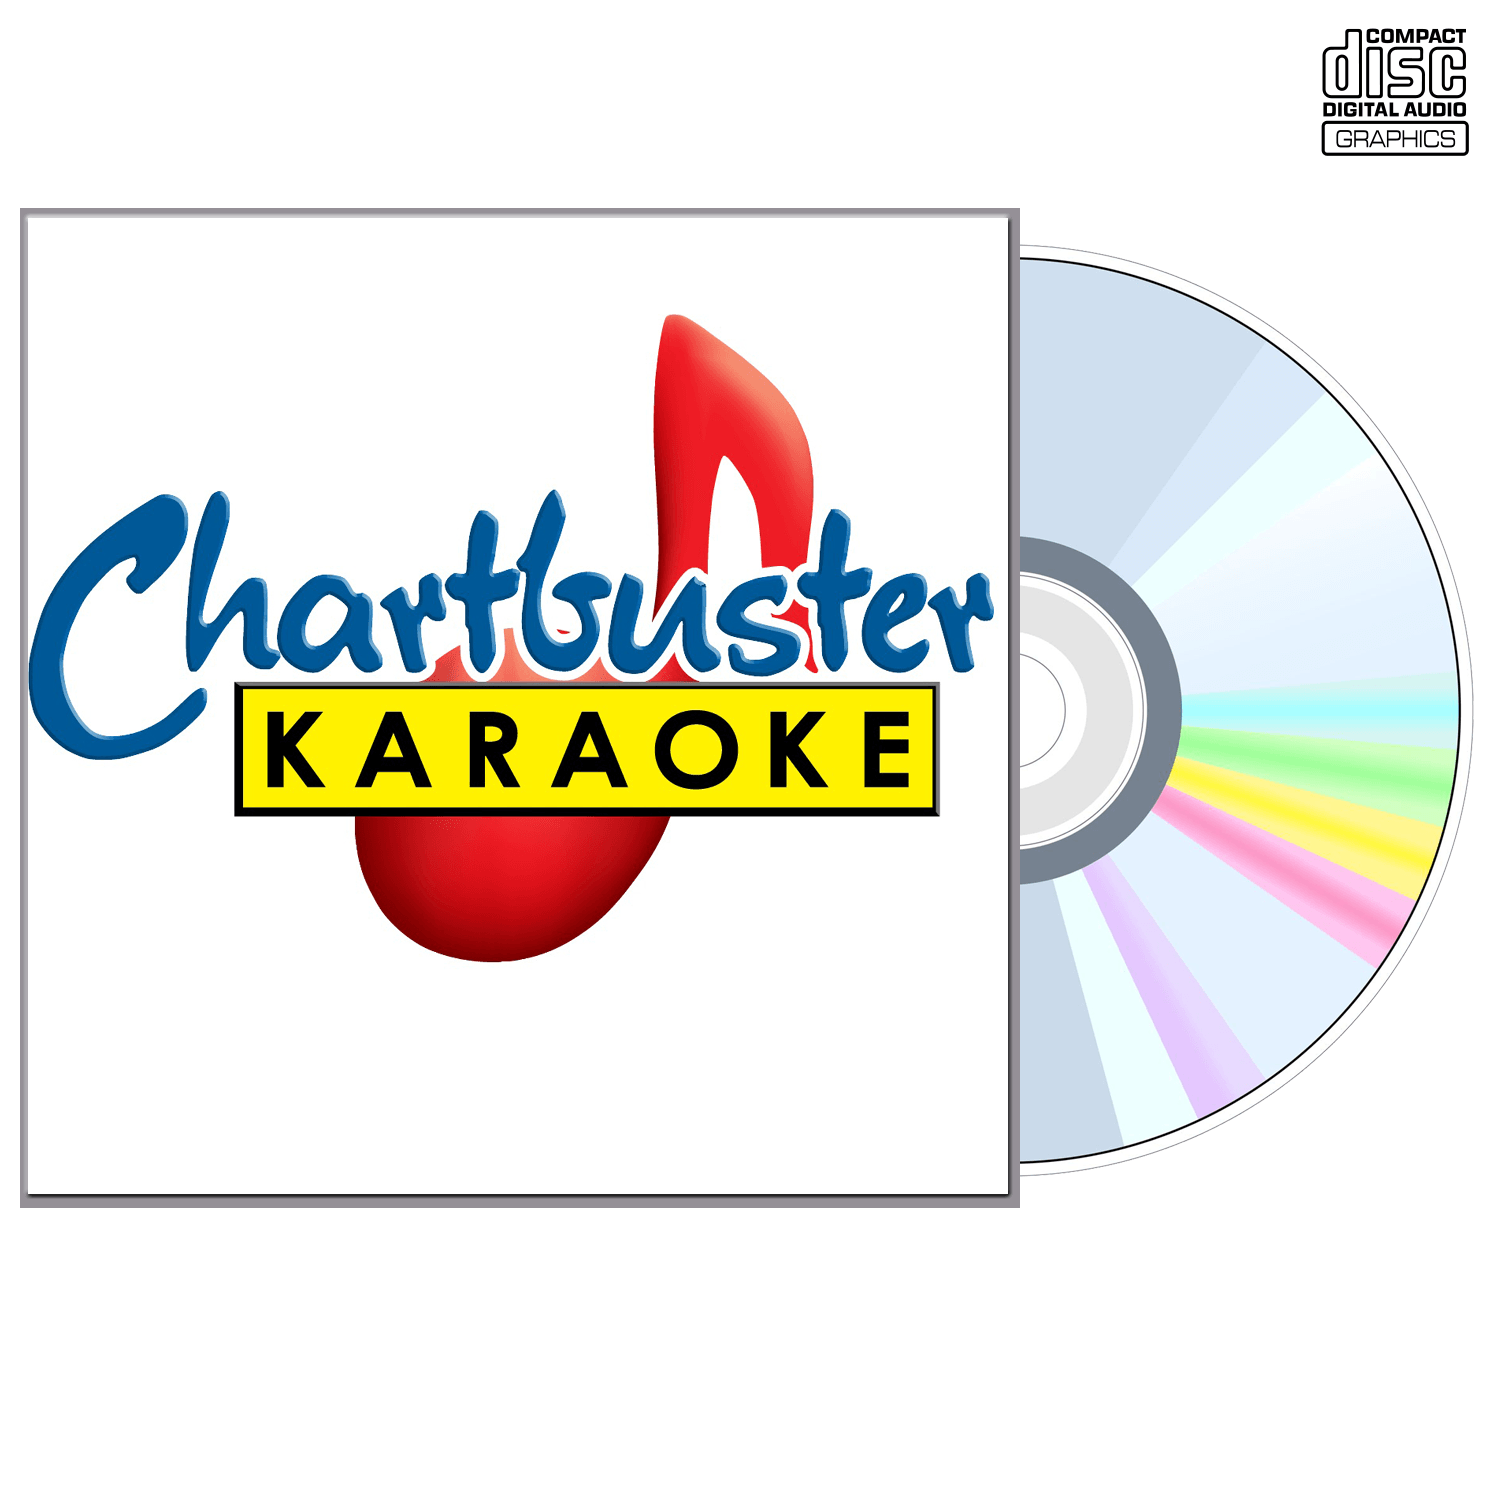 Best Of Hank Williams - CD+G - Chartbuster Karaoke - Karaoke Home Entertainment